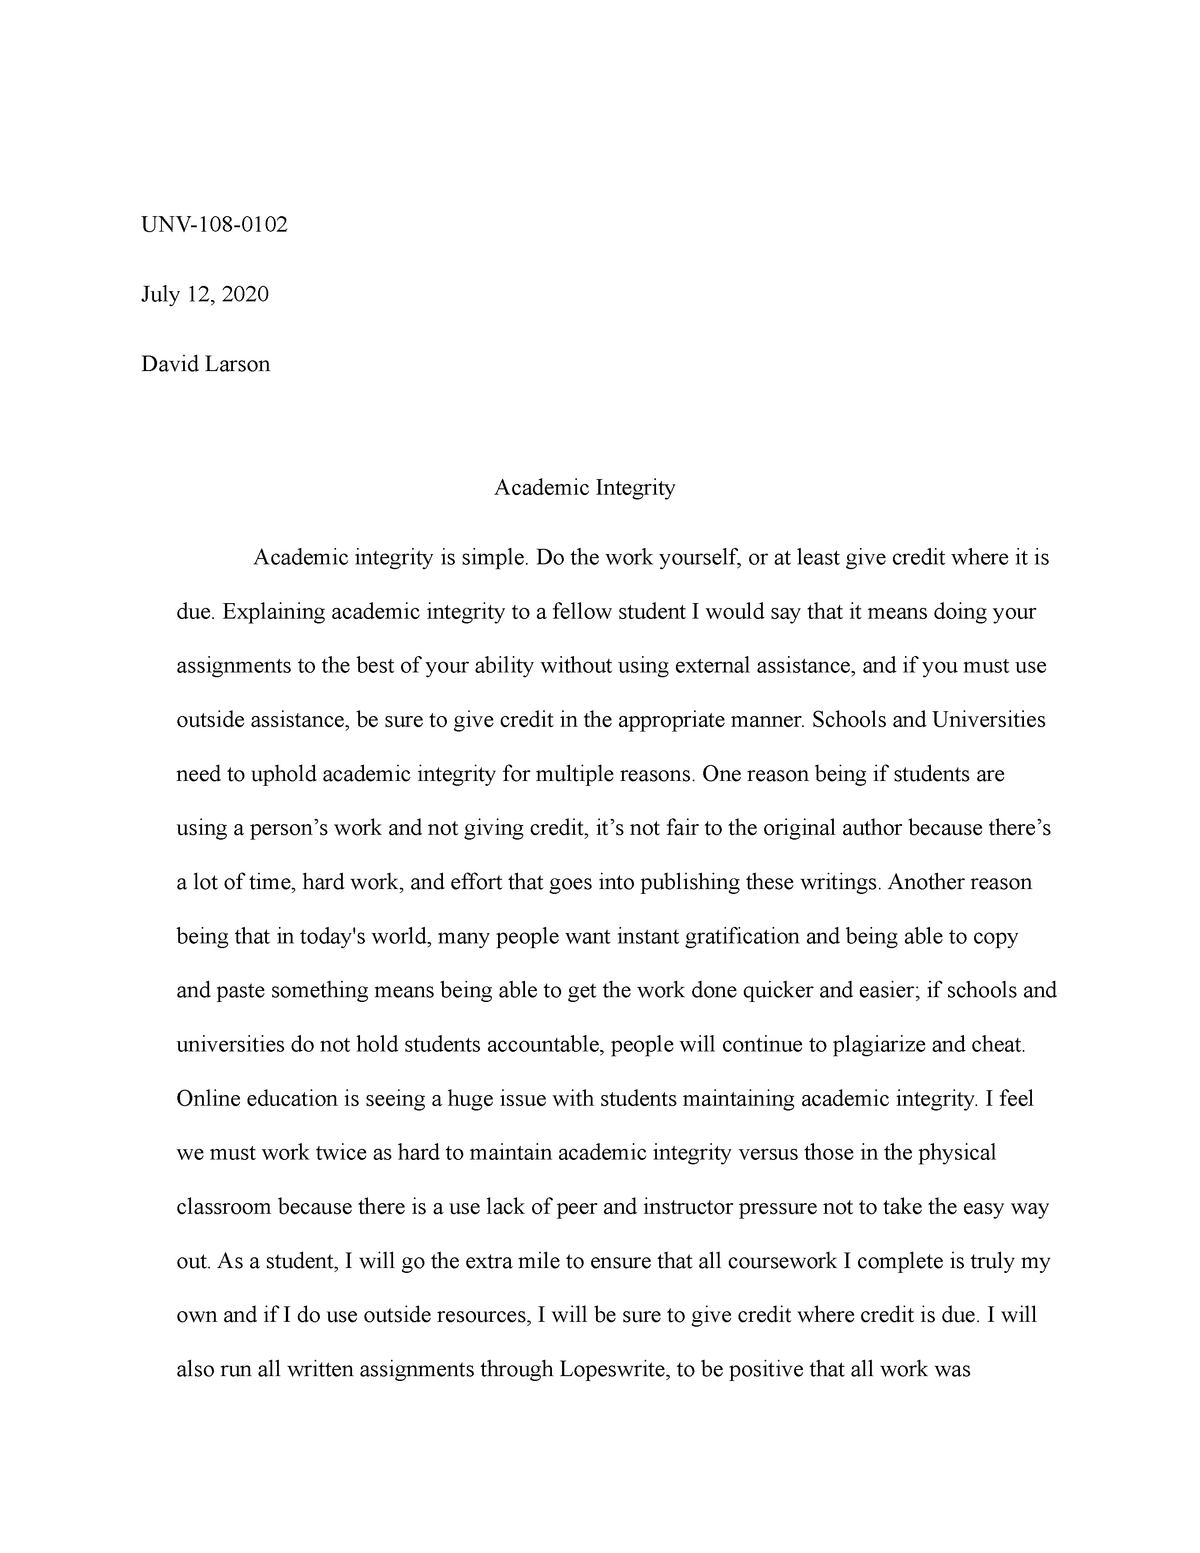 integrity essay 1000 words